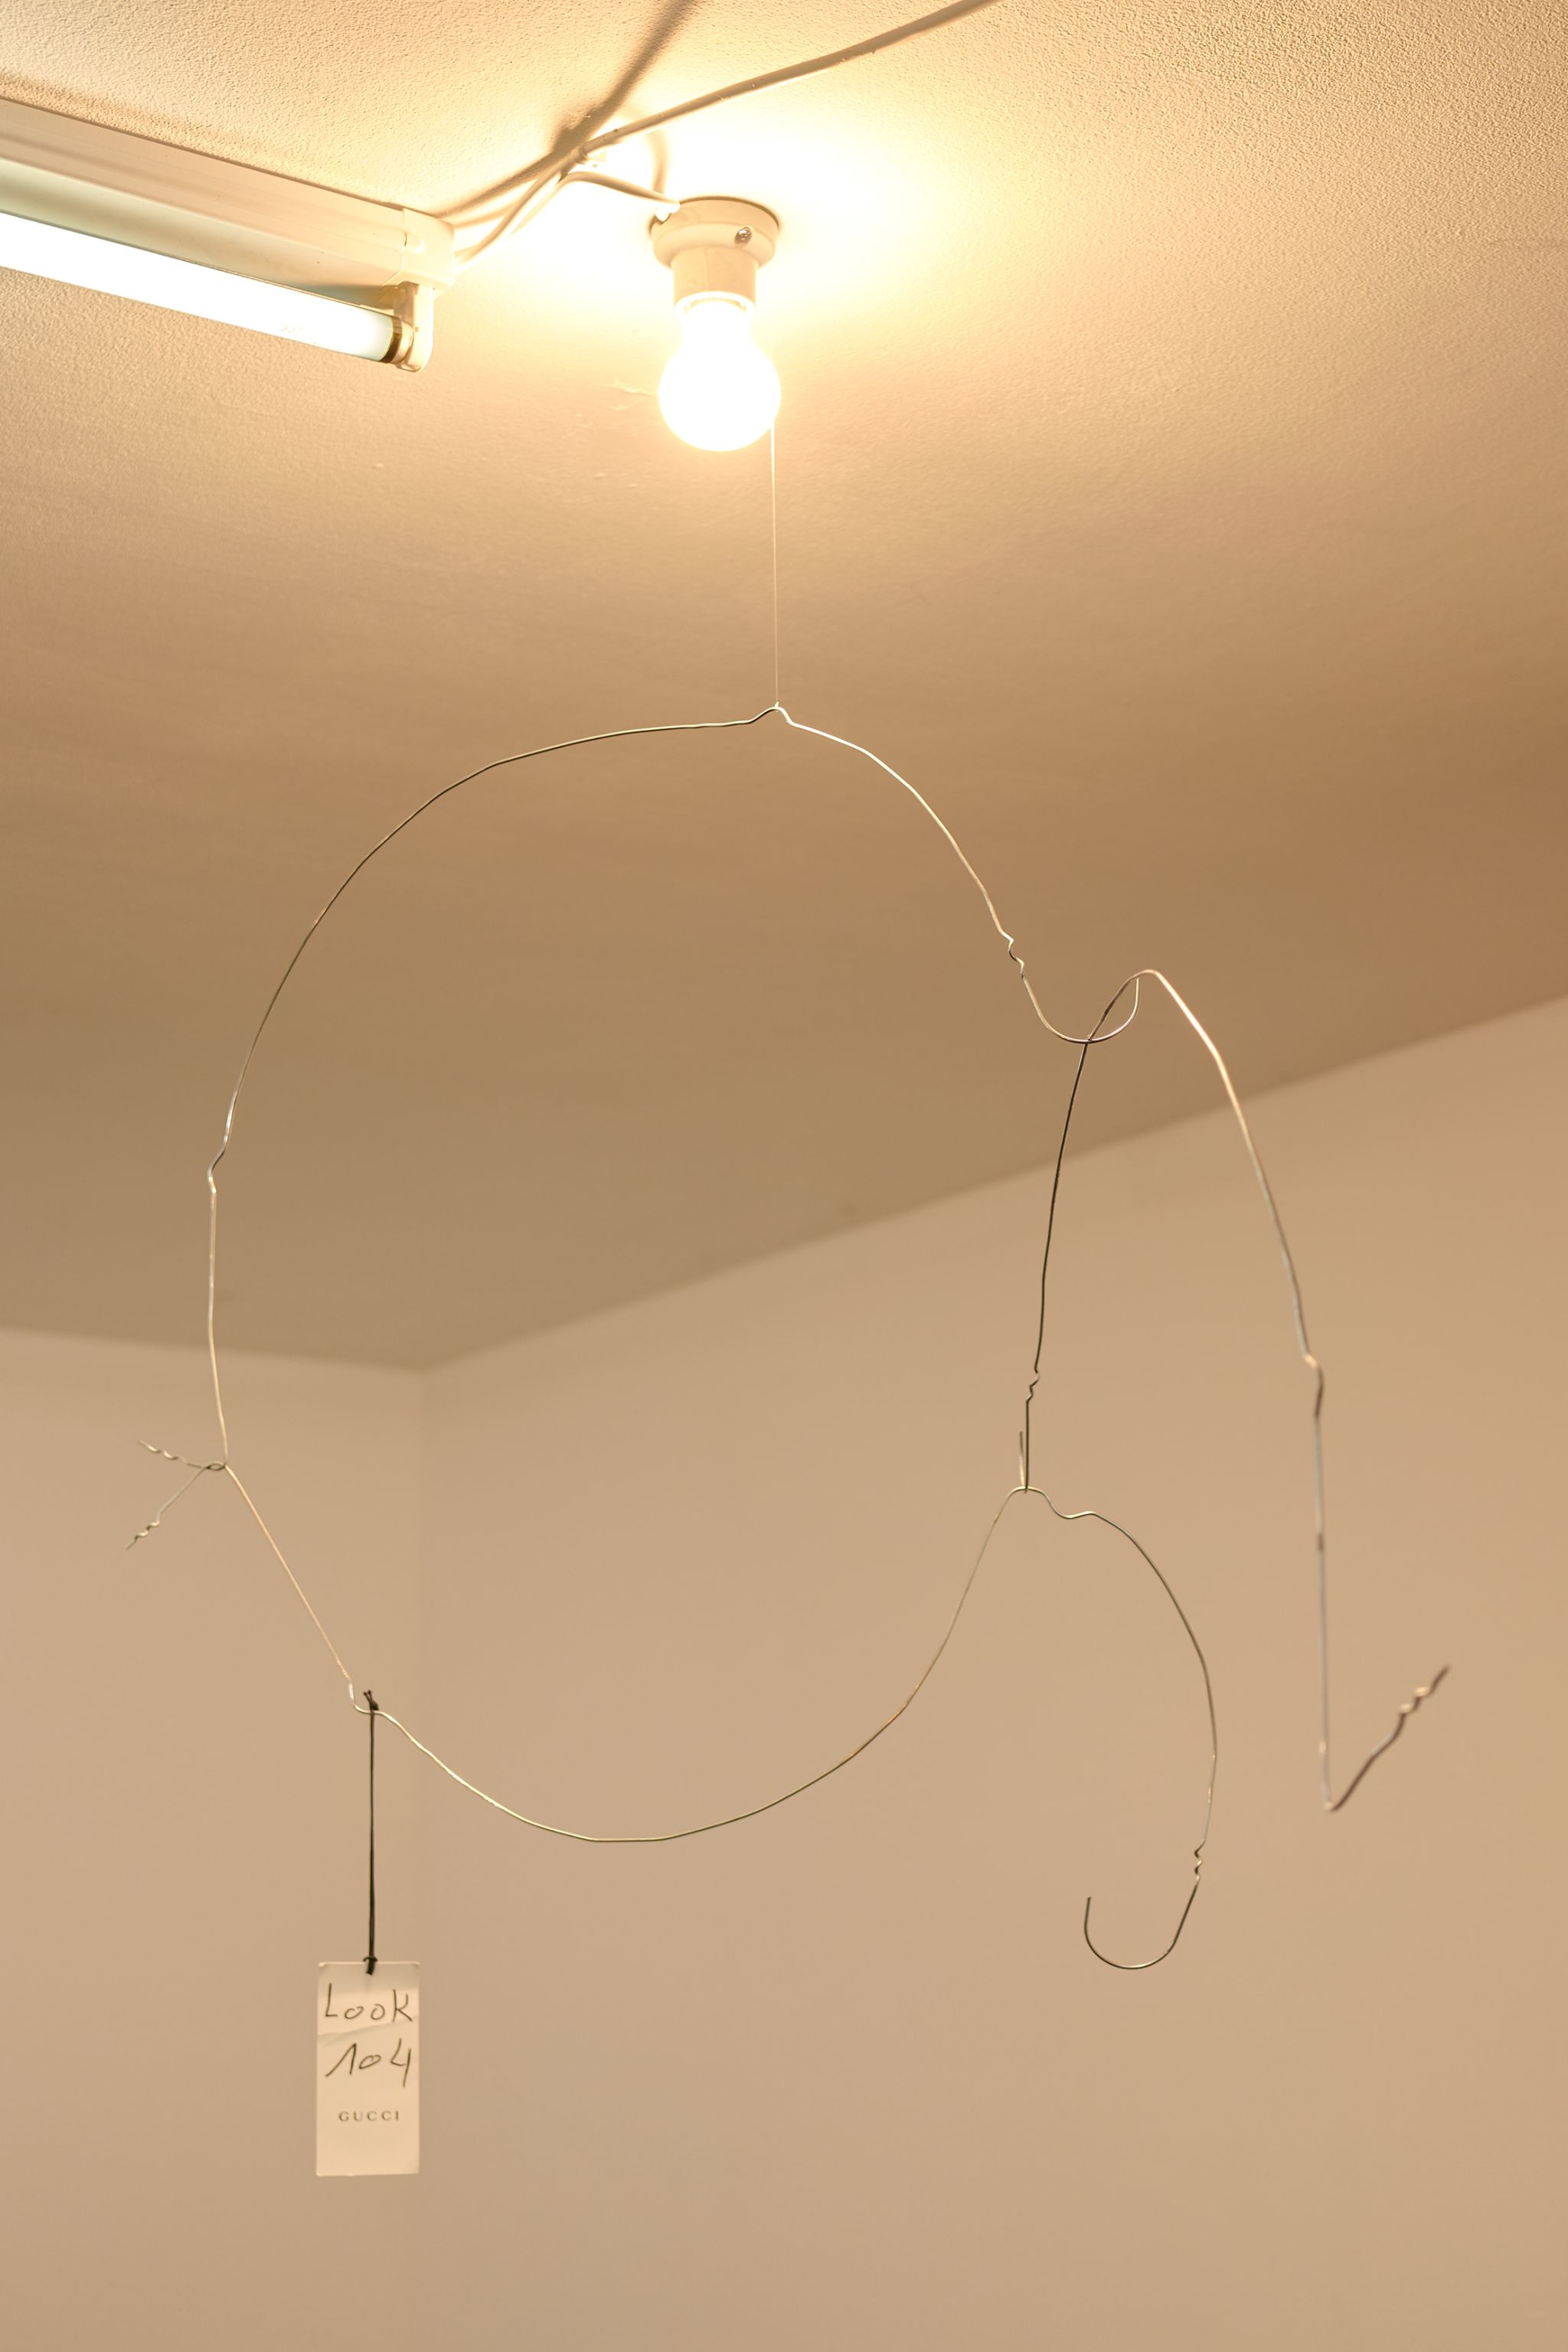 Davide Stucchi, Milan (Mobile 1) Entrance, 2020, Ceramic lamp holder, light bulb, aluminum clothes hangers, tag, 105 ⁠× ⁠100 ⁠× ⁠50 ⁠⁠cm